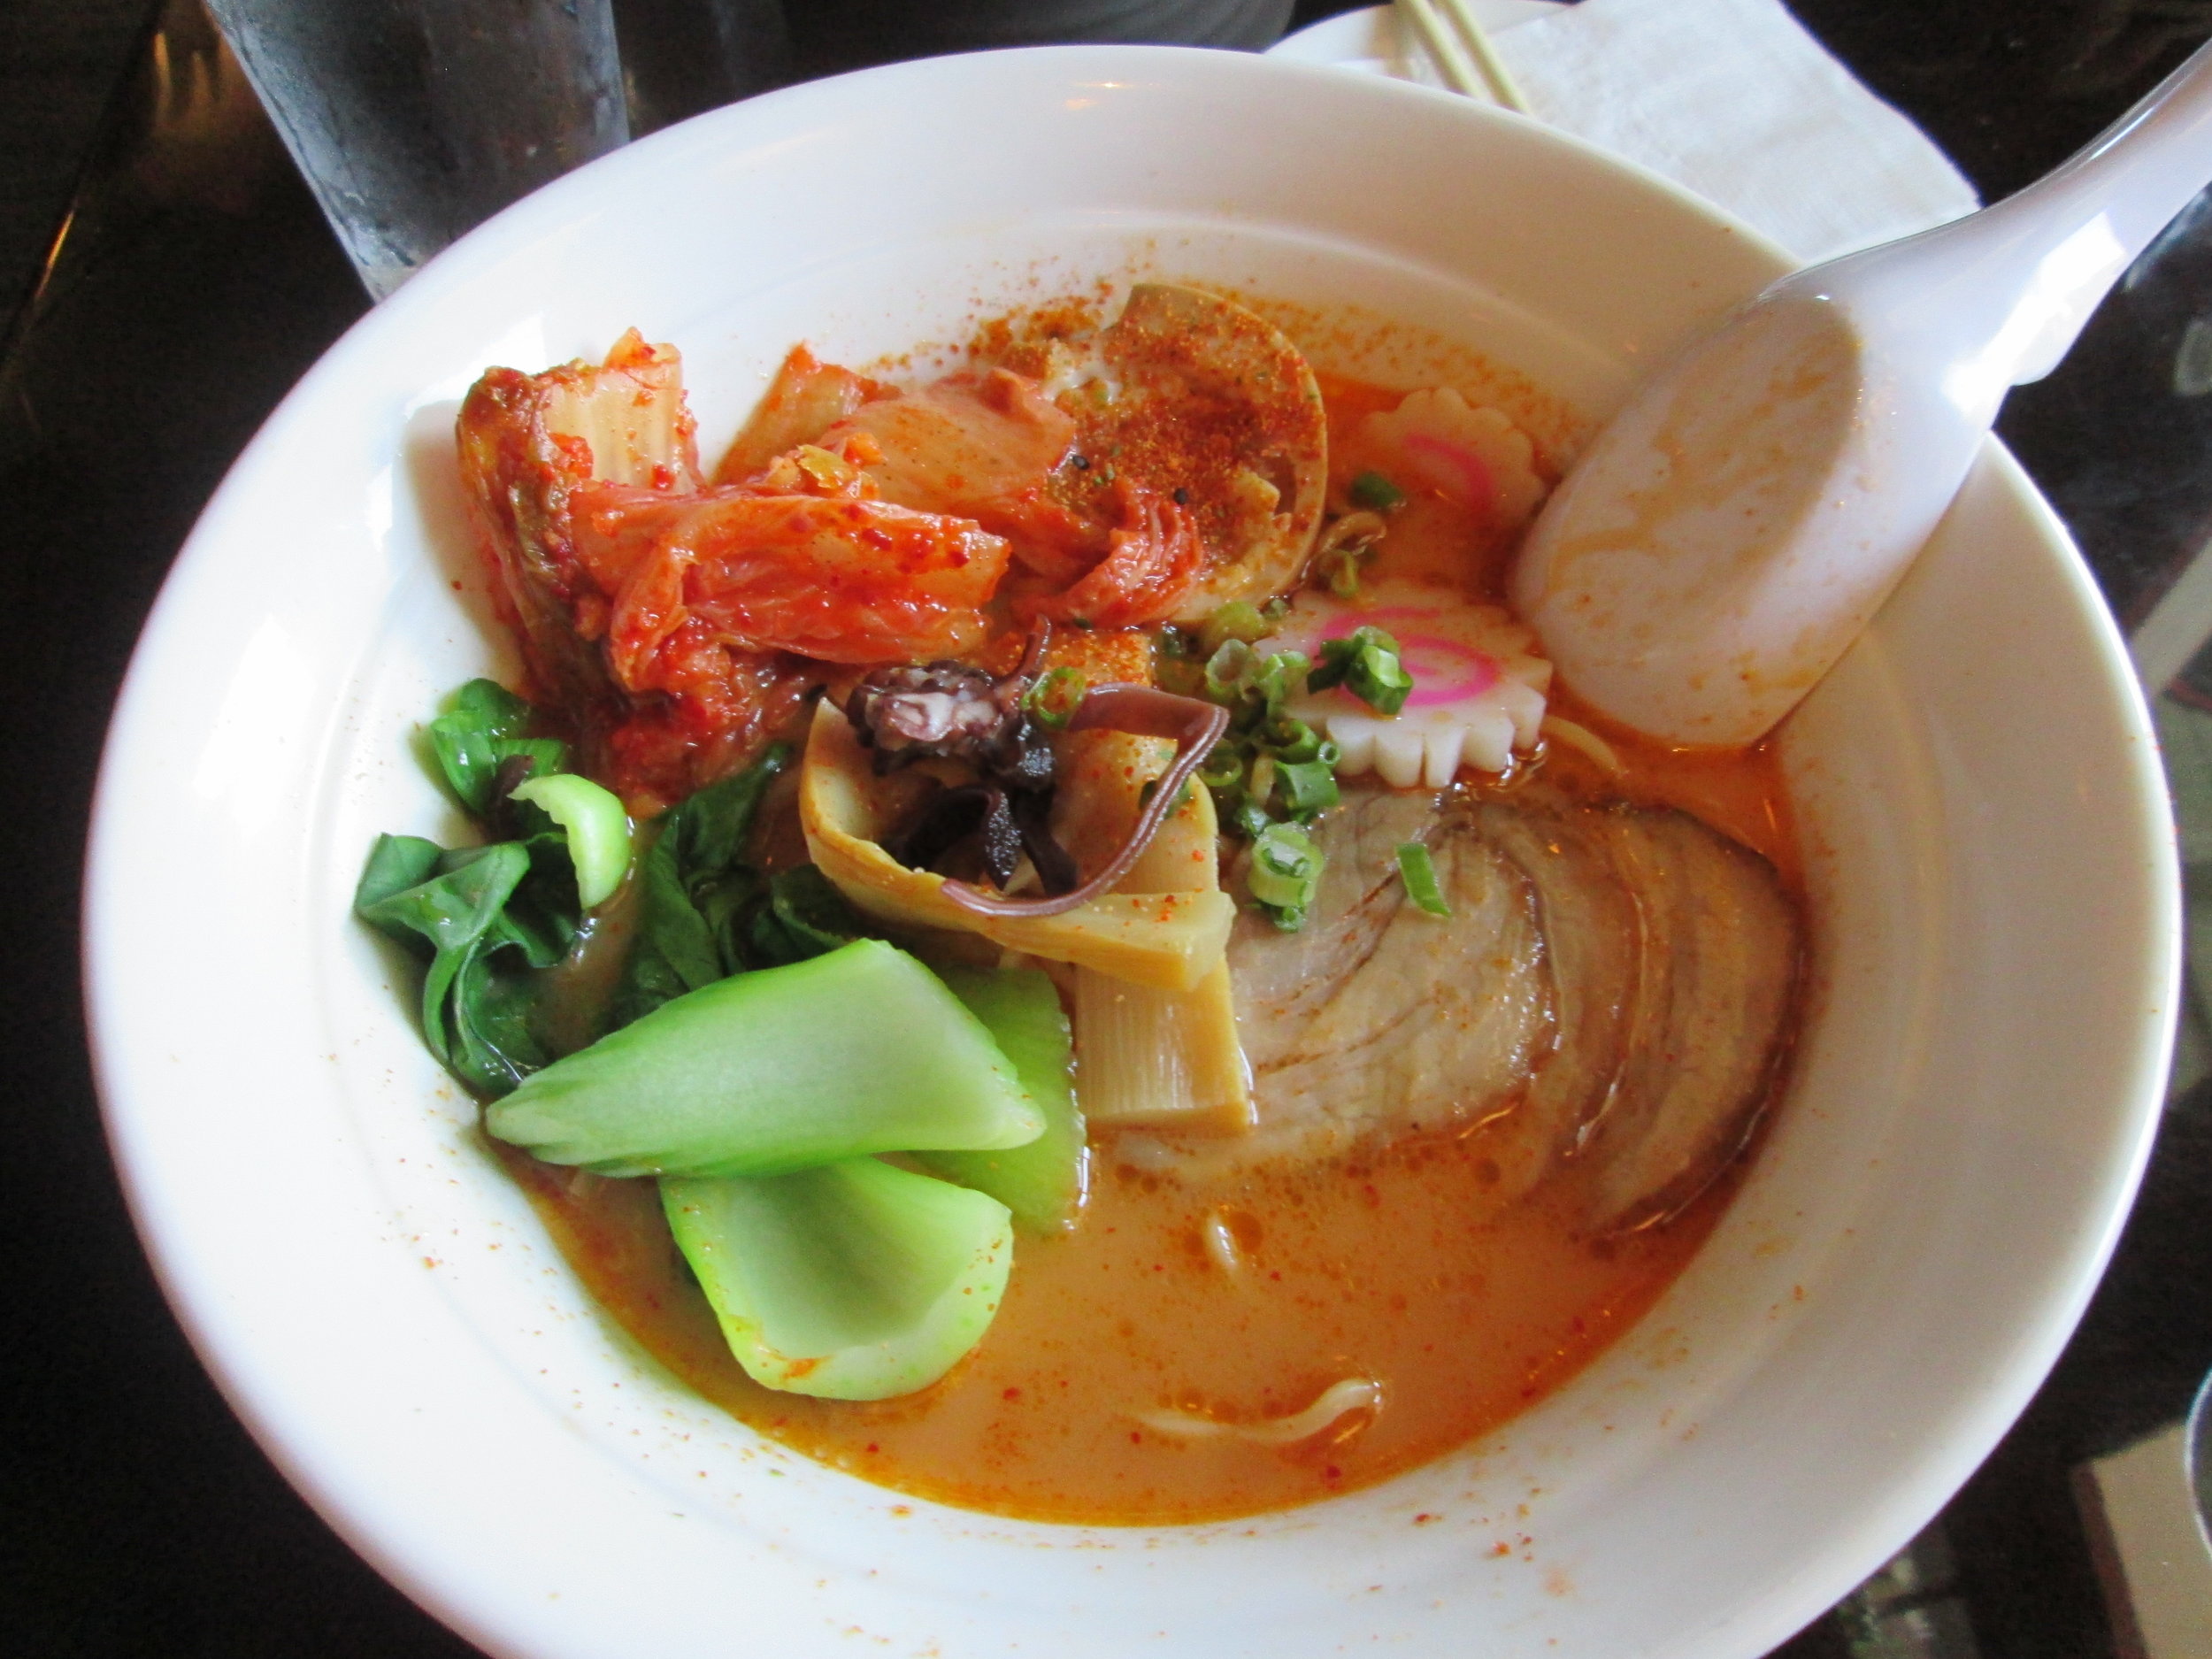  Spicy tonkotsu ramen with beef, bok choy, and kimchi 